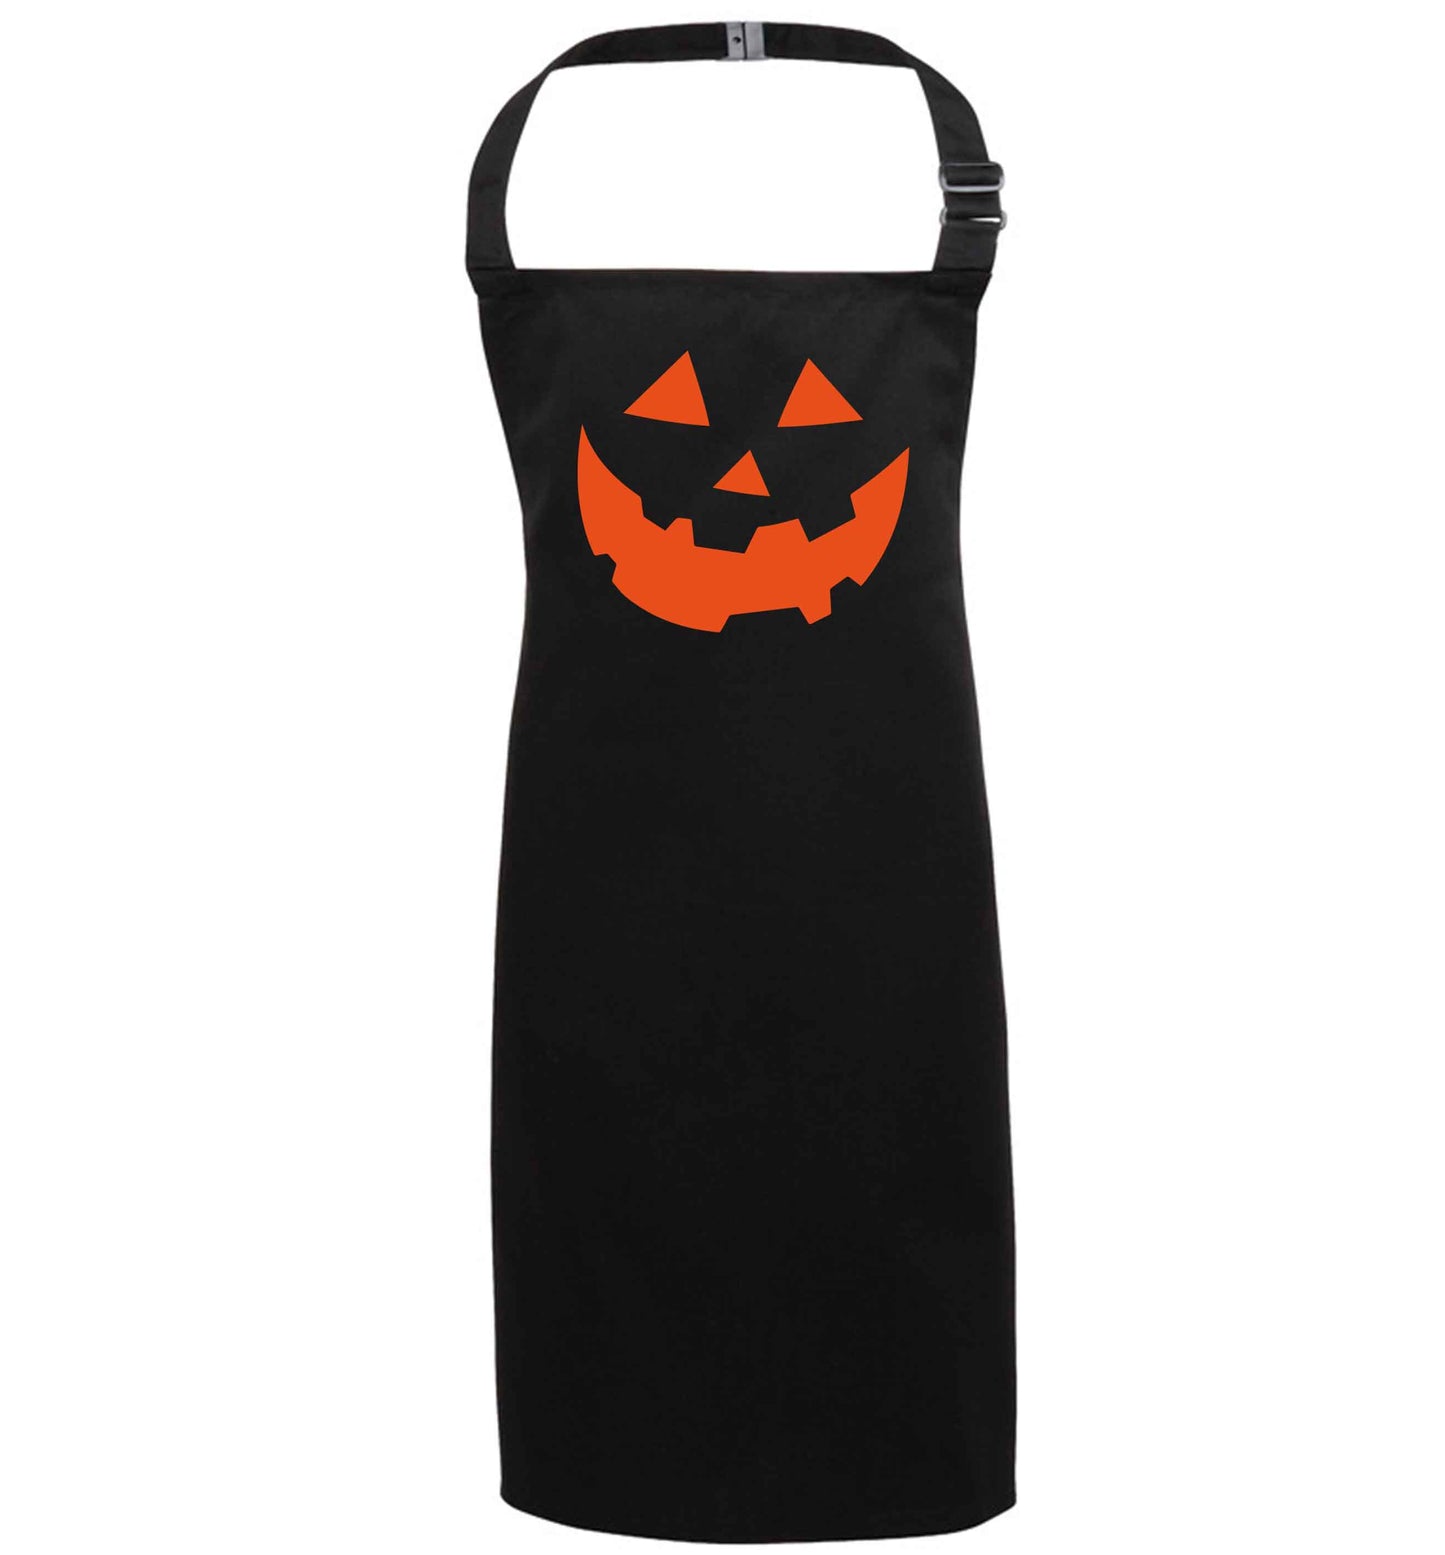 Pumpkin Spice Nice black apron 7-10 years